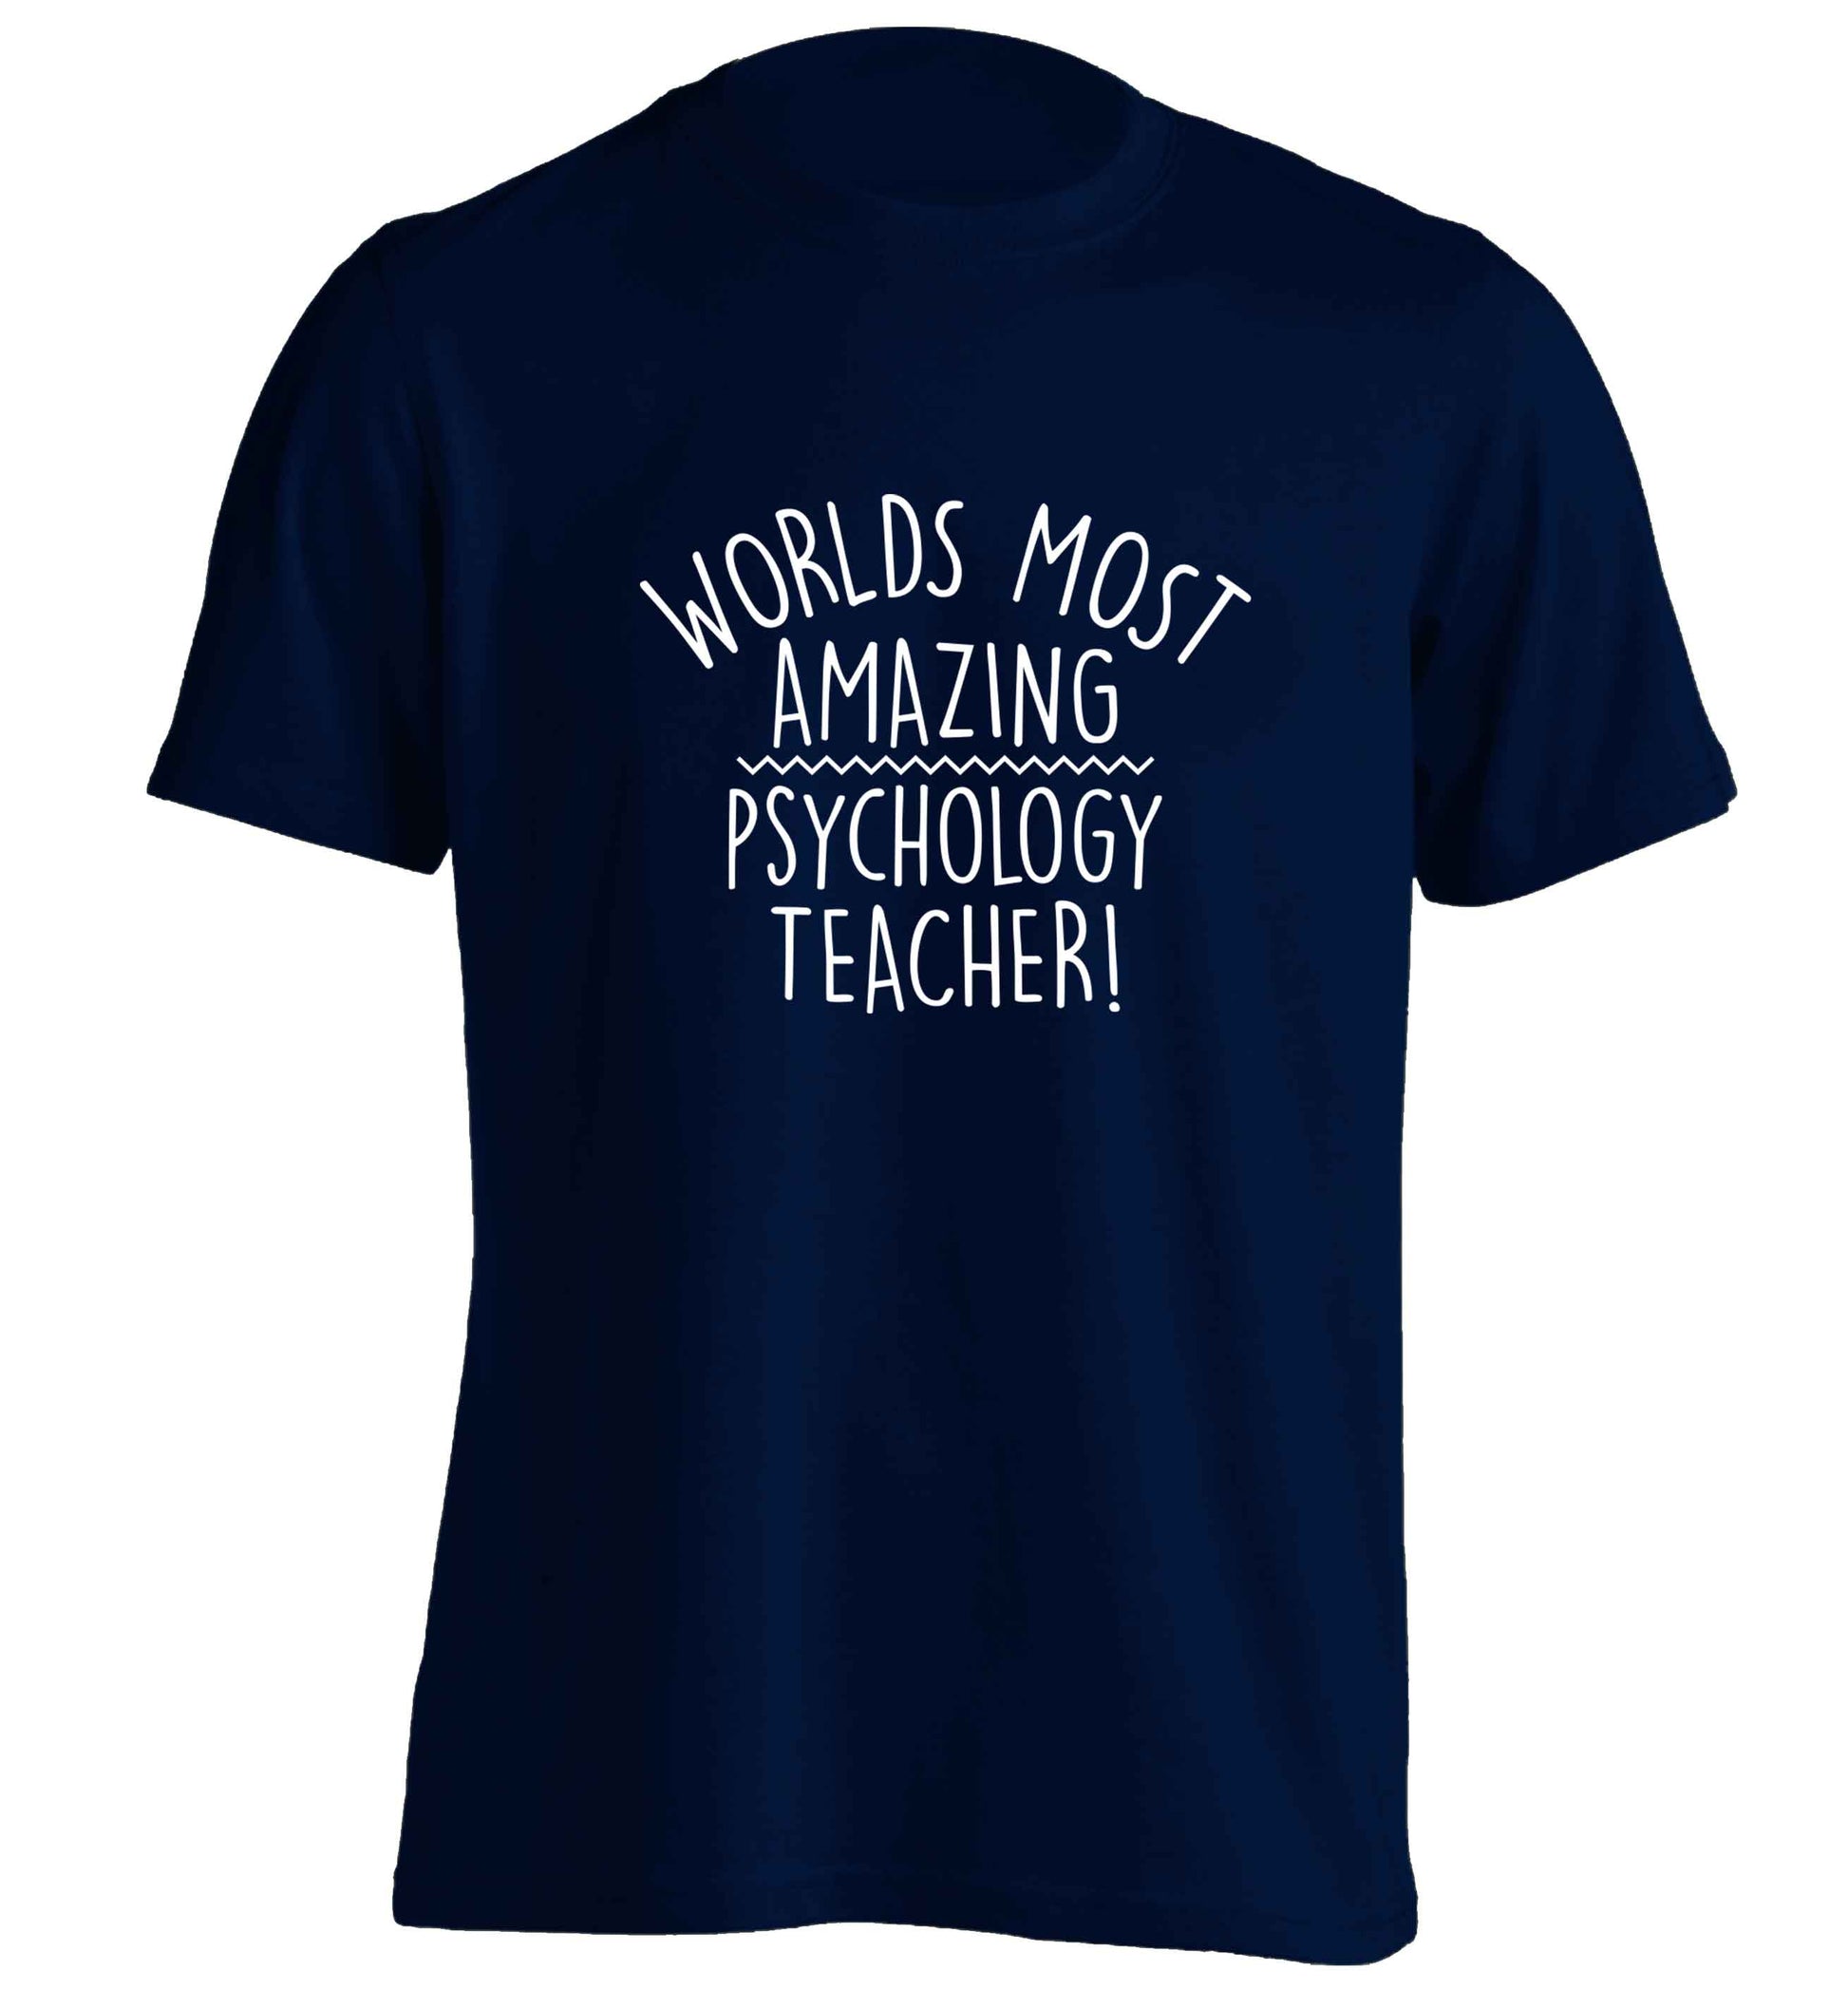 Worlds most amazing psychology teacher adults unisex navy Tshirt 2XL